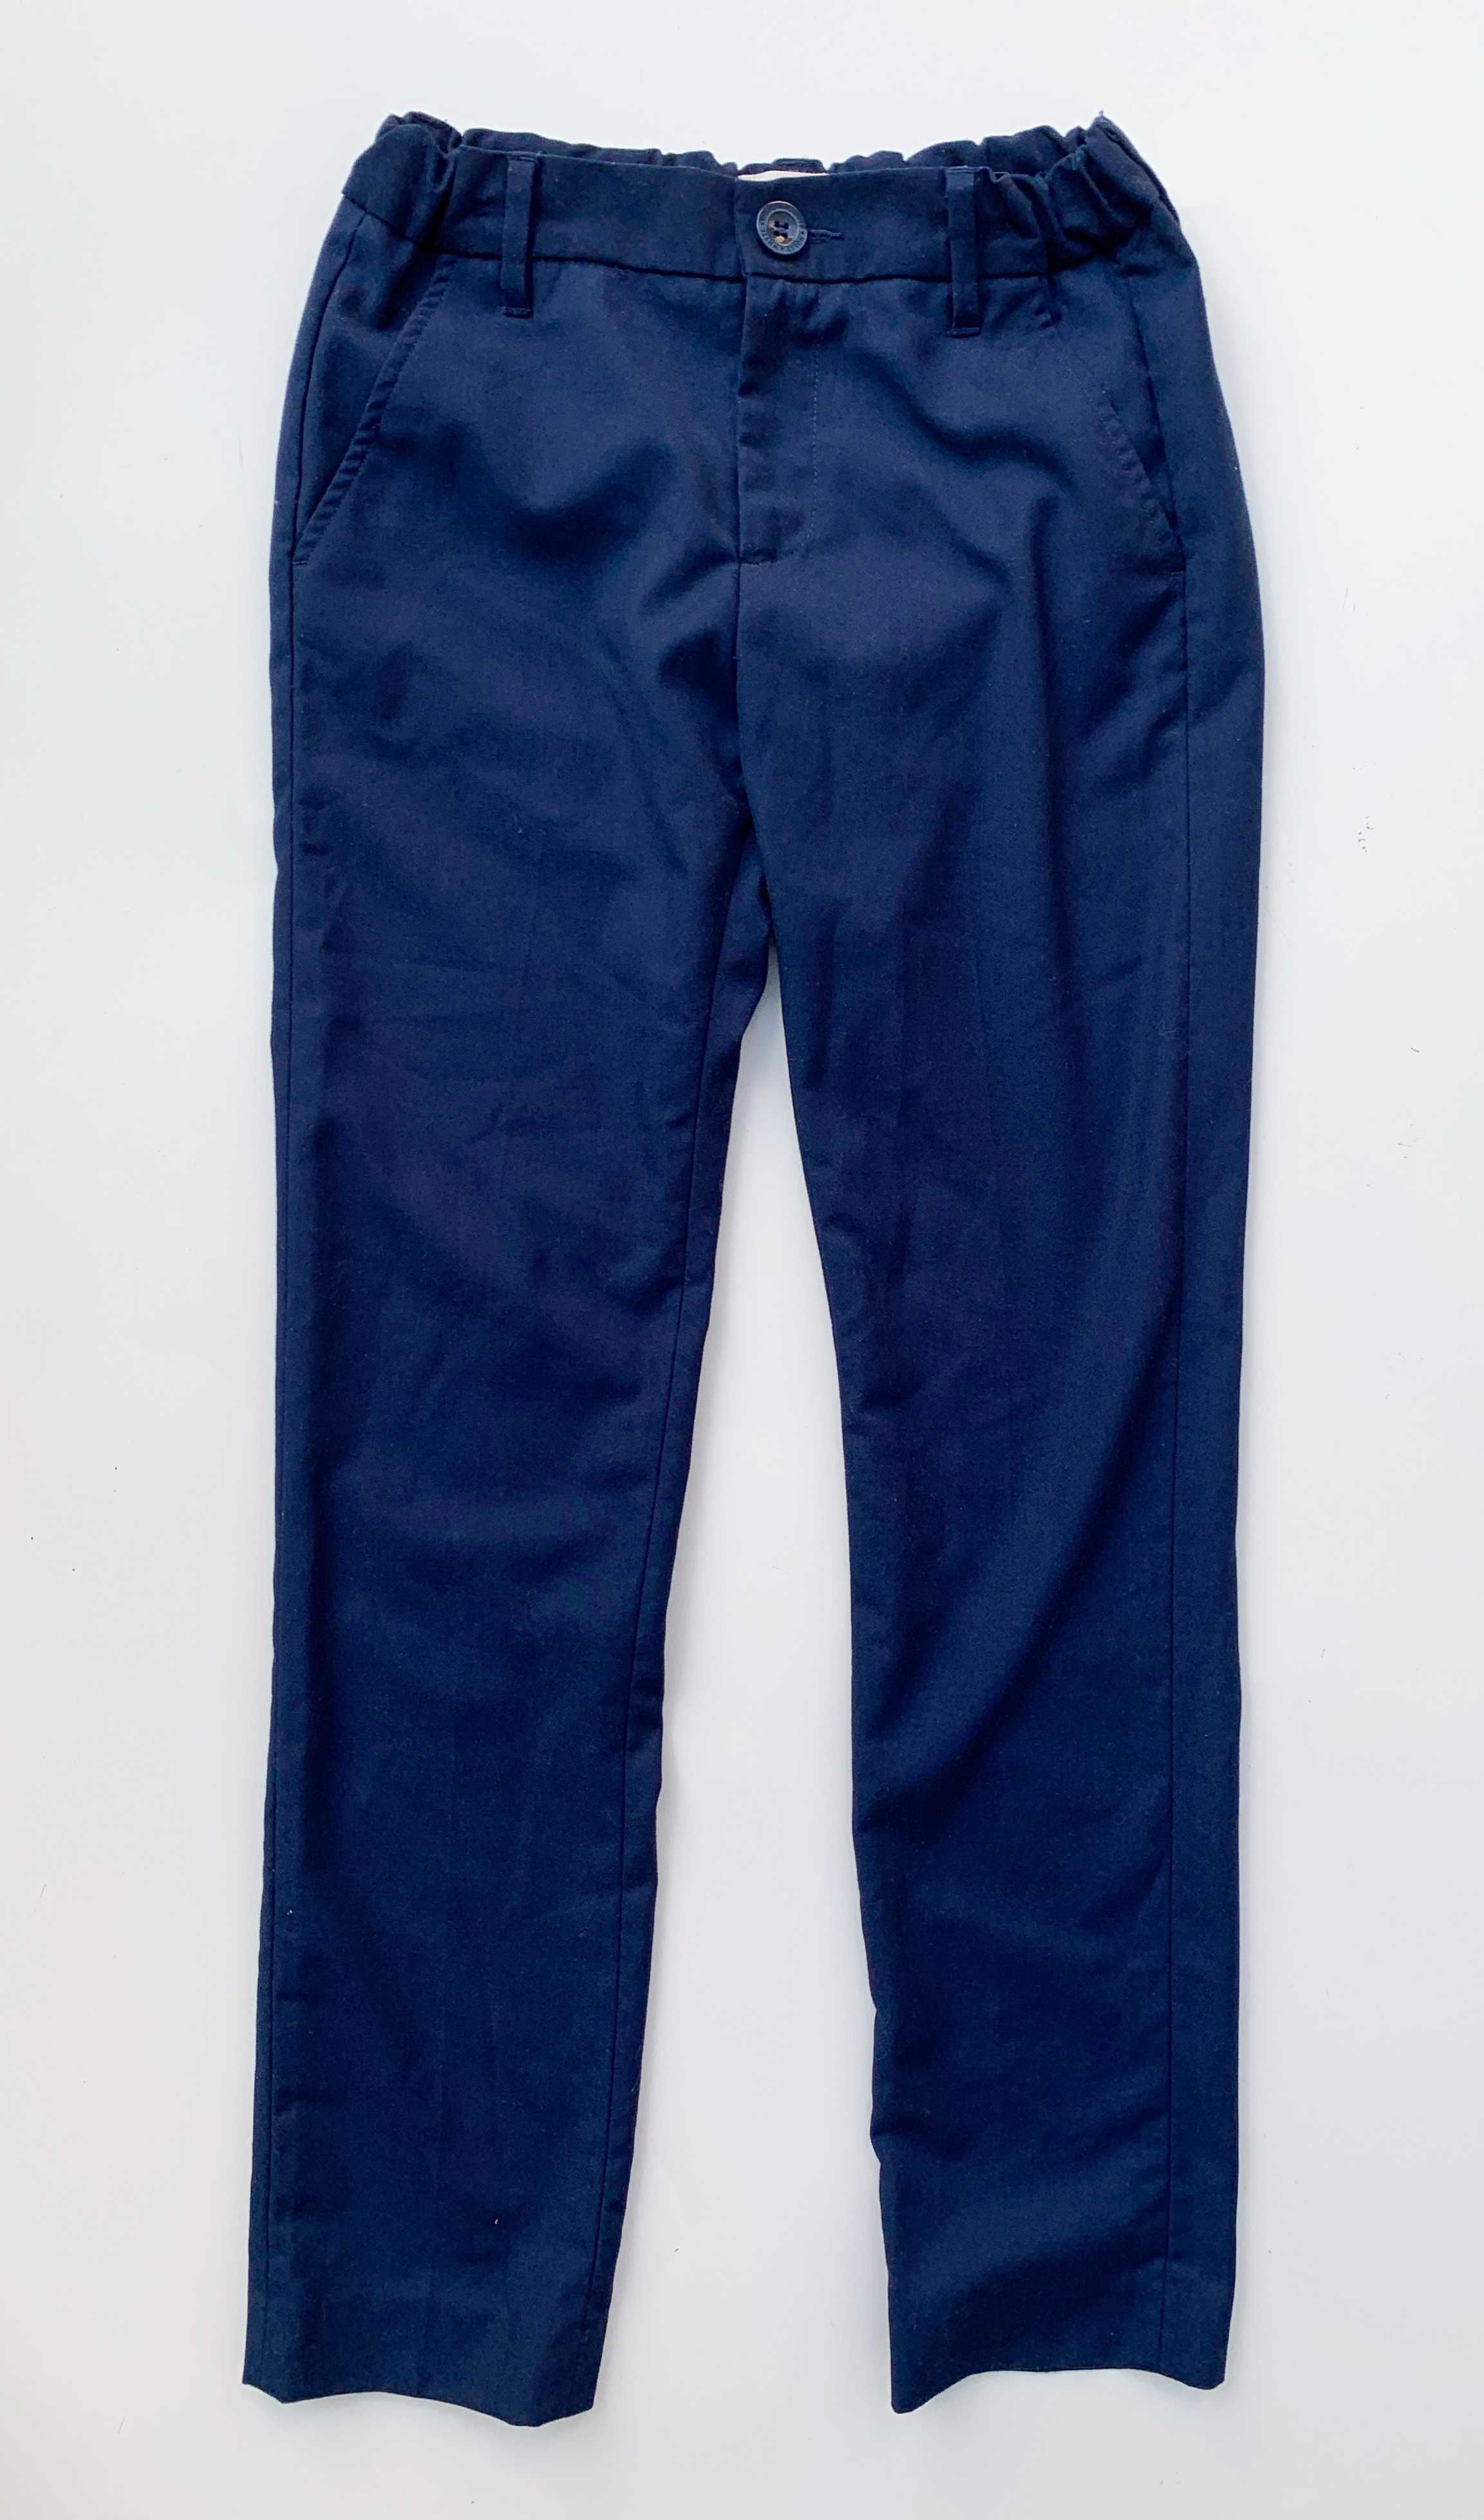 Spodnie Granatowe 152 cm 11 12 lat Lindex Eleganckie Garnitur